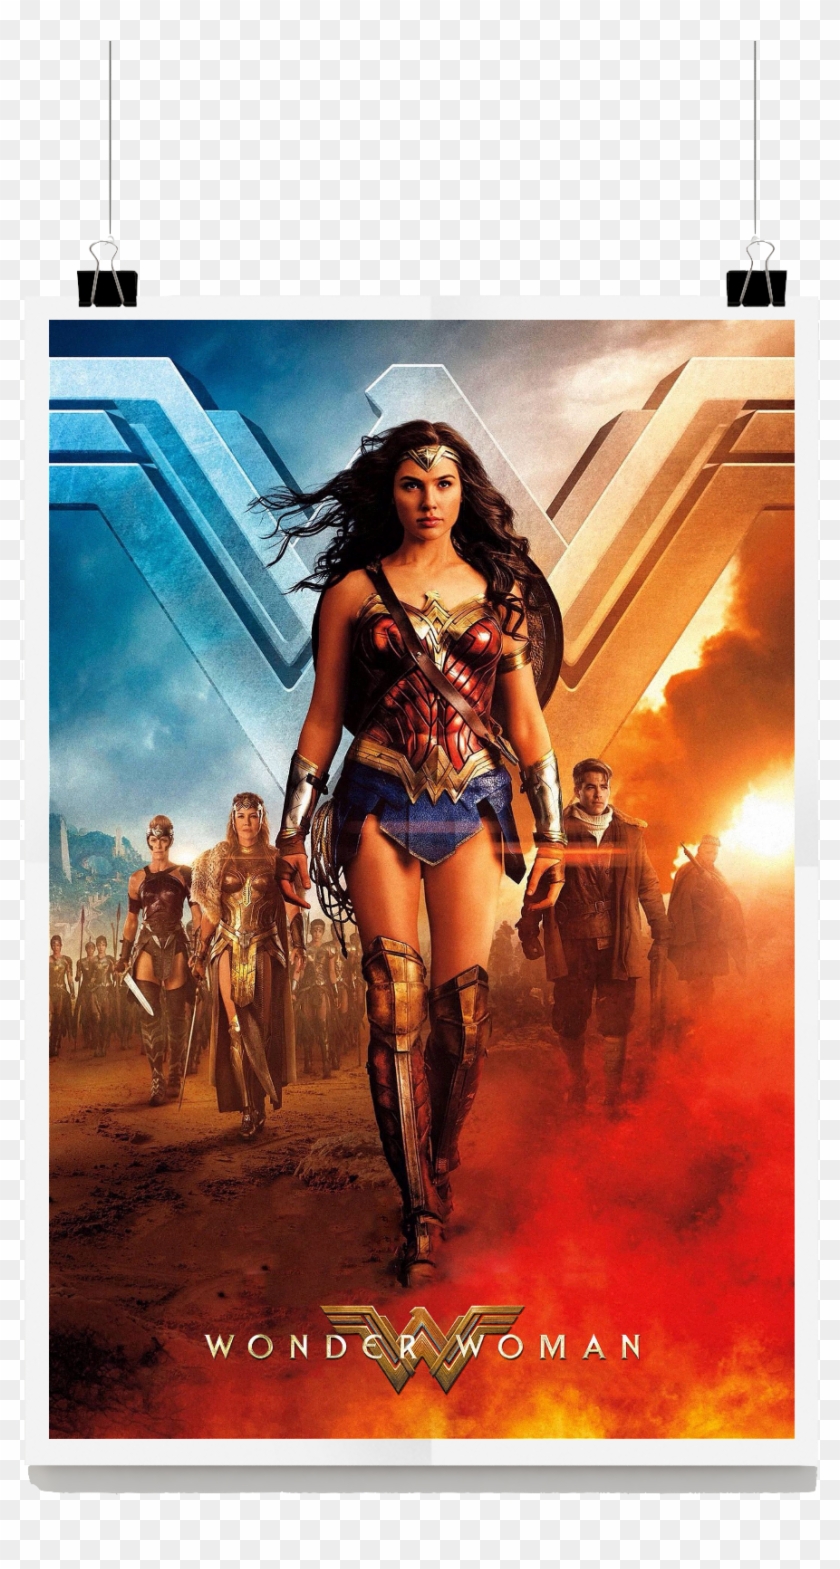 Wonder Woman Movie Review - Wonder Woman Background Clipart #5565148